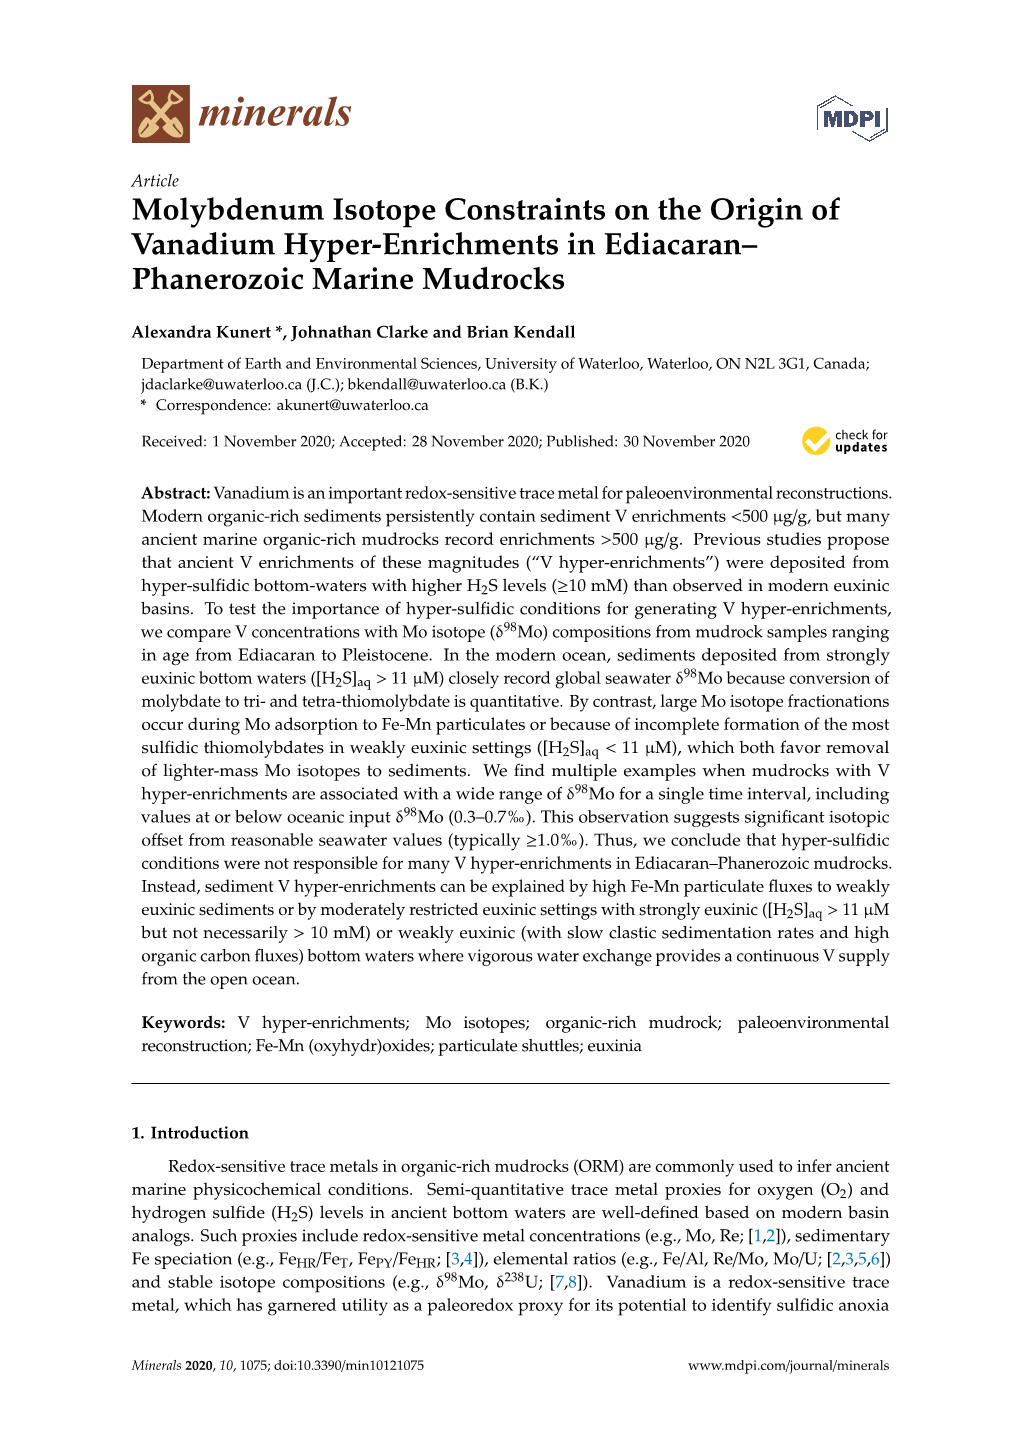 Molybdenum Isotope Constraints on the Origin of Vanadium Hyper-Enrichments in Ediacaran– Phanerozoic Marine Mudrocks